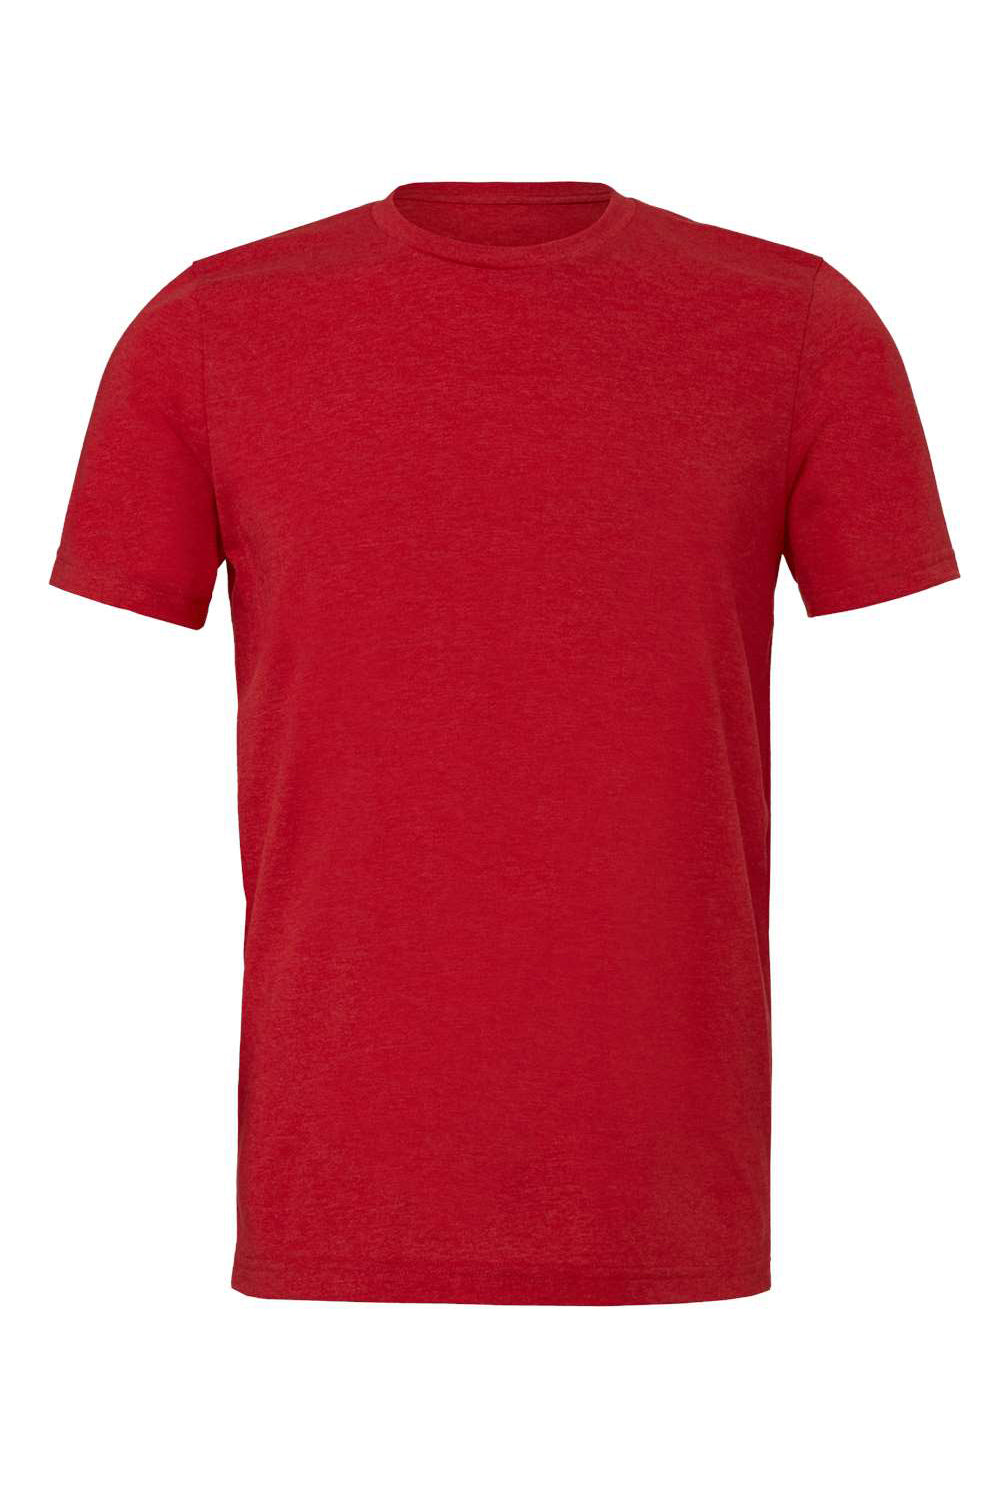 Bella + Canvas BC3413/3413C/3413 Mens Short Sleeve Crewneck T-Shirt Solid Red Flat Front